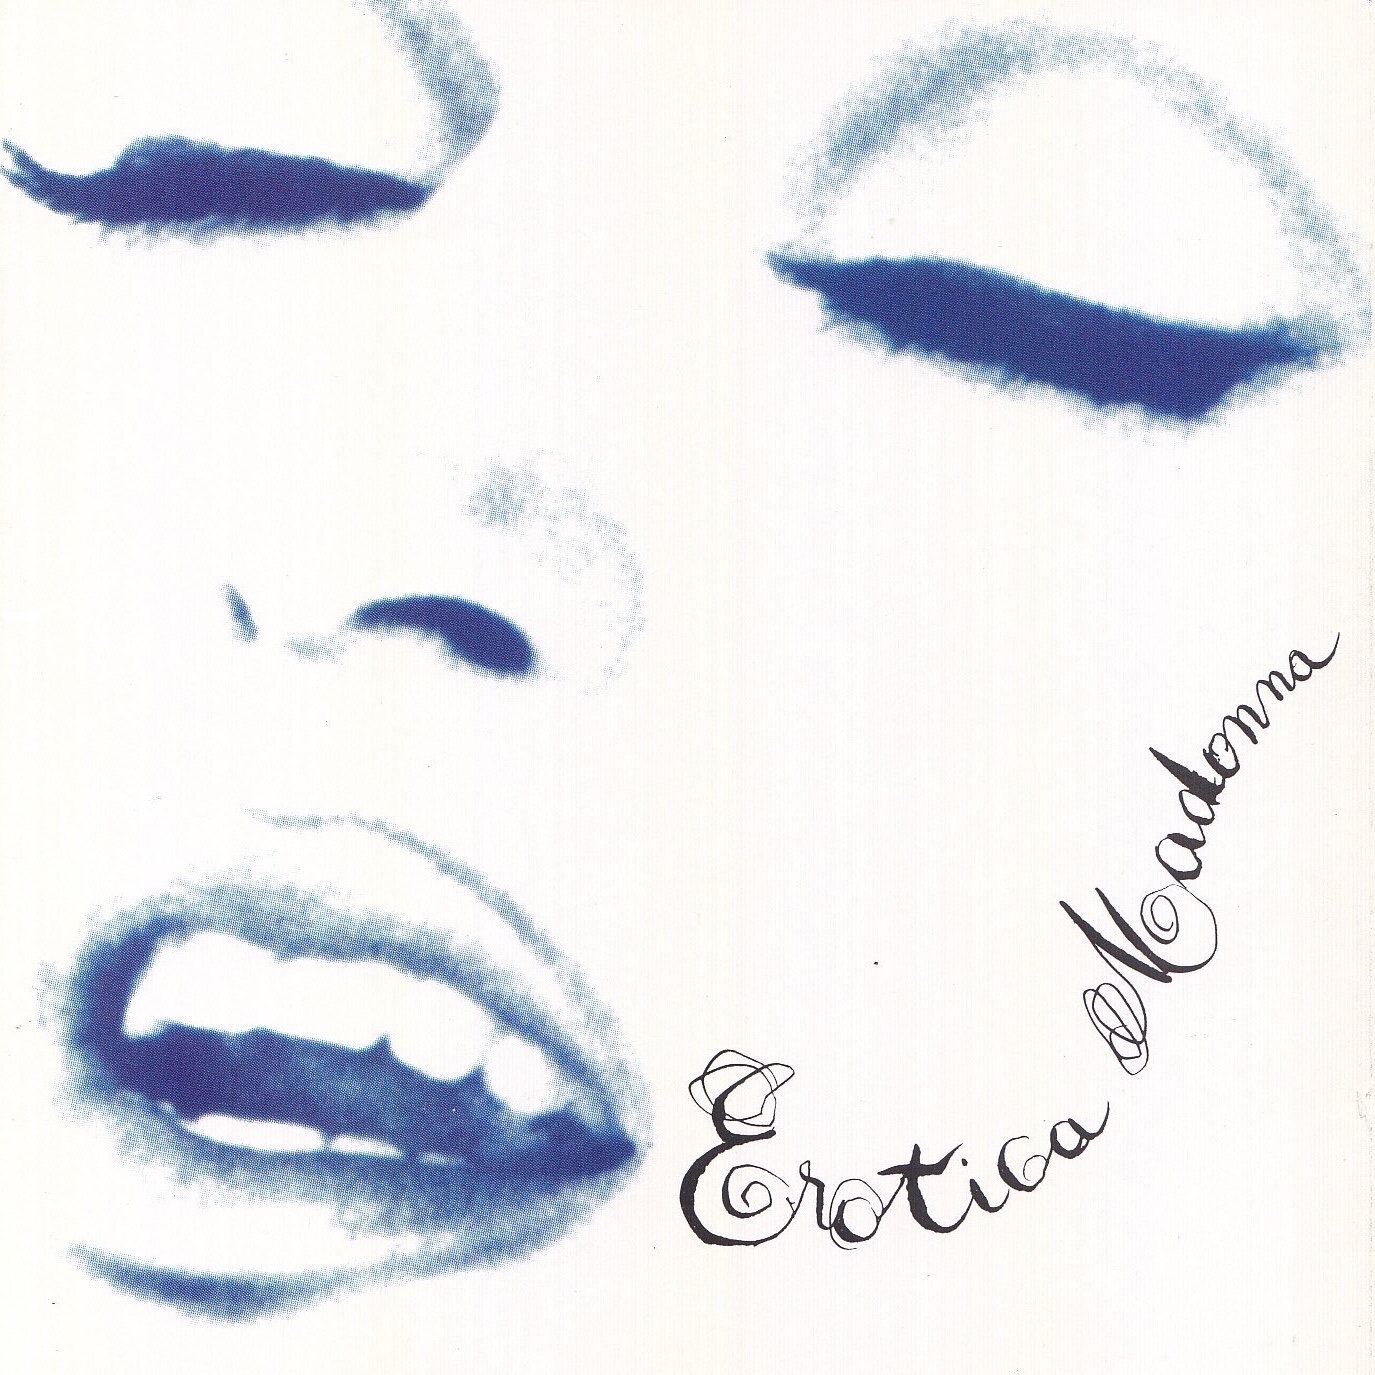 (16) Erotica - Madonna.jpg